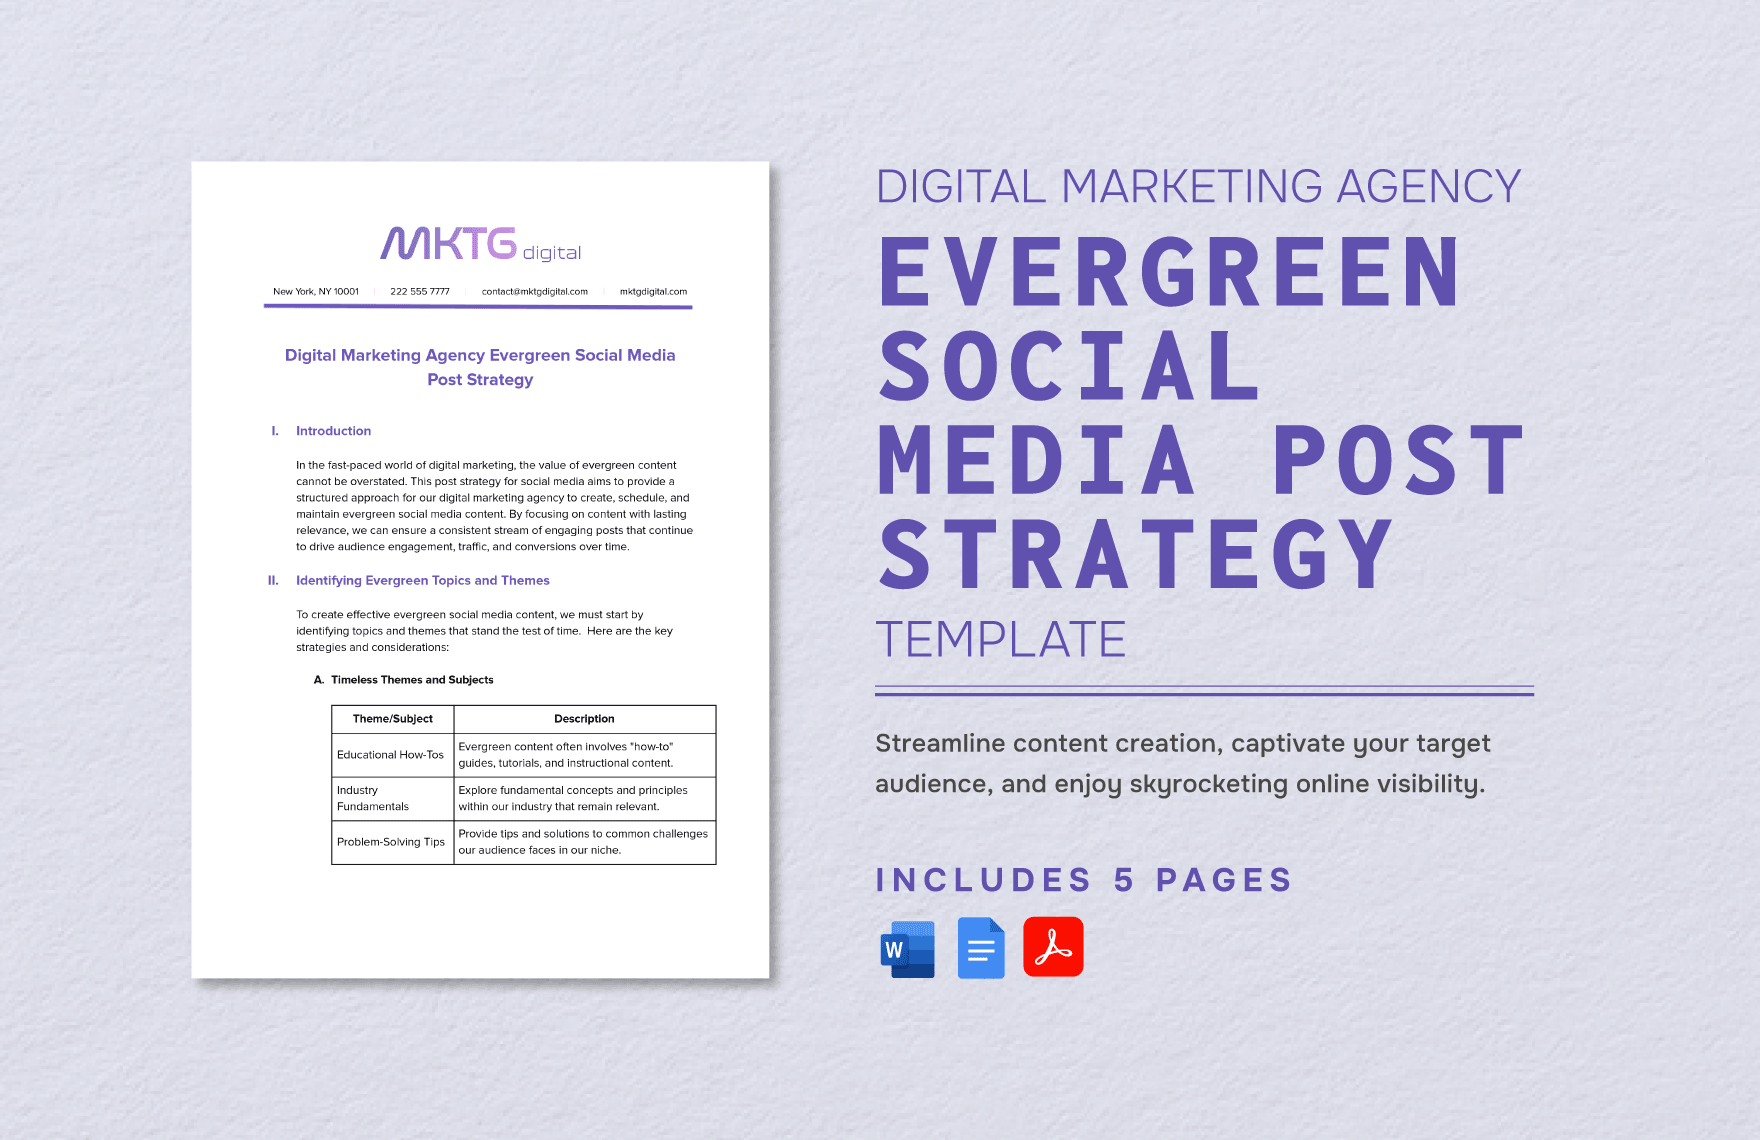 Digital Marketing Agency Evergreen Social Media Post Strategy Template